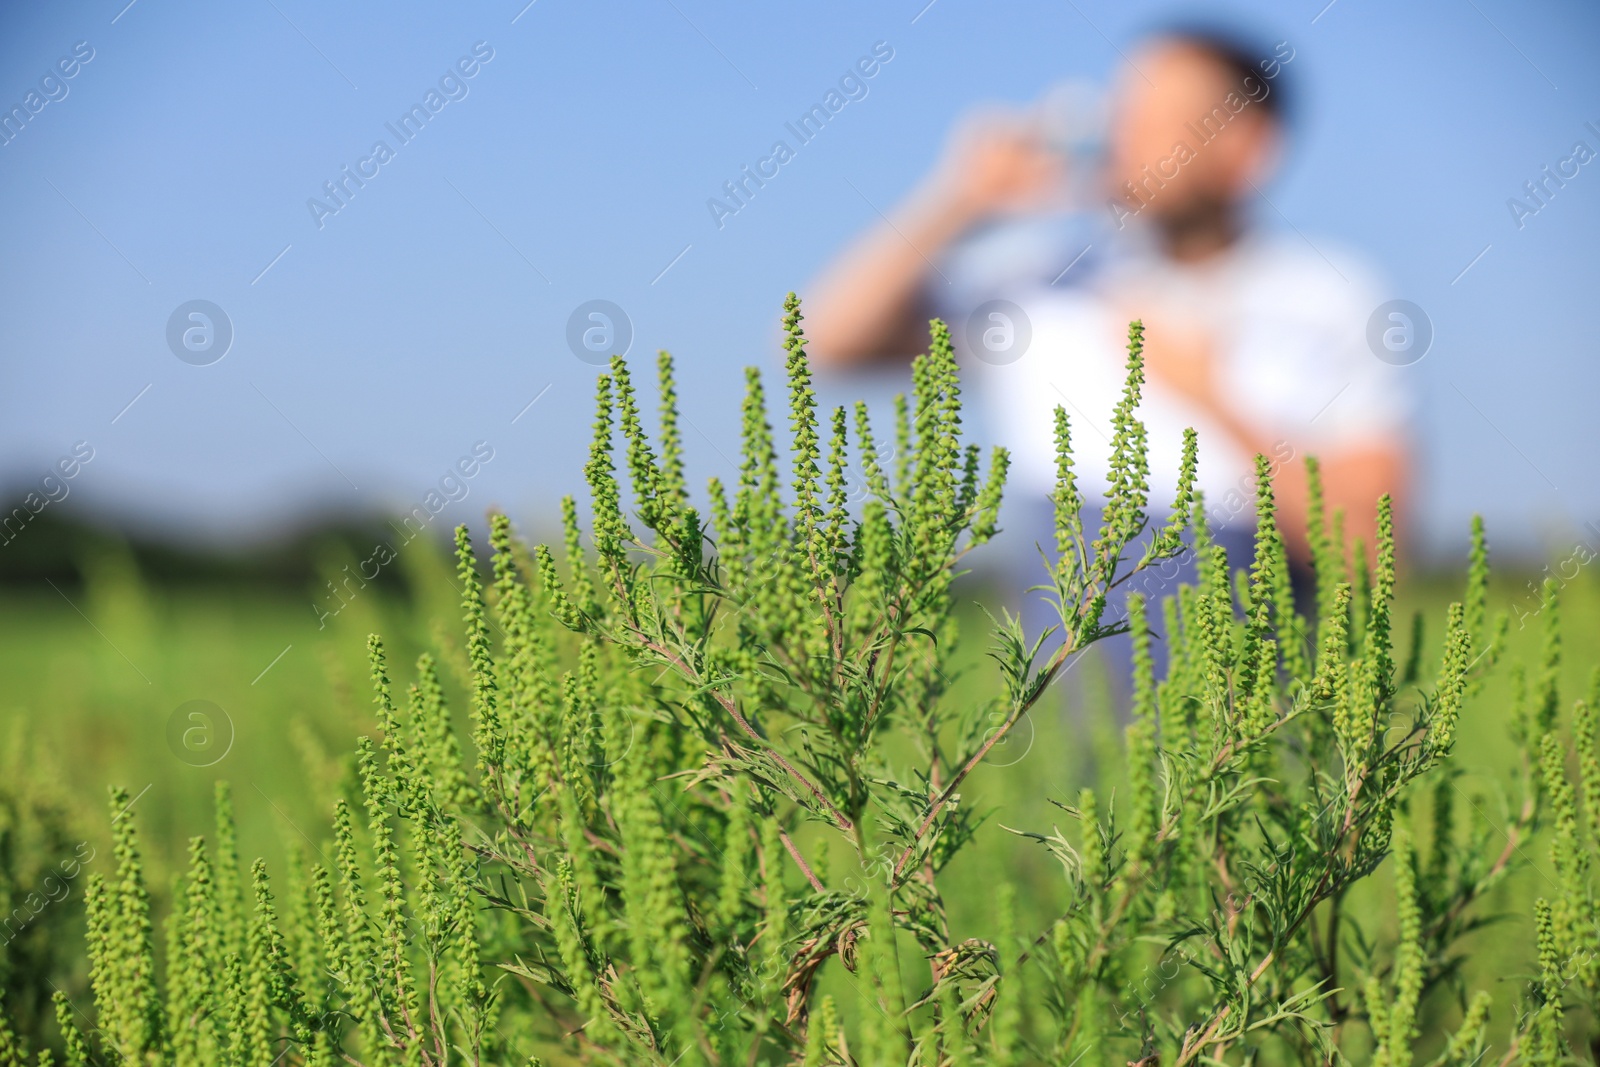 Photo of Blooming ragweed plant (Ambrosia genus) and blurred man on background, closeup. Seasonal allergy